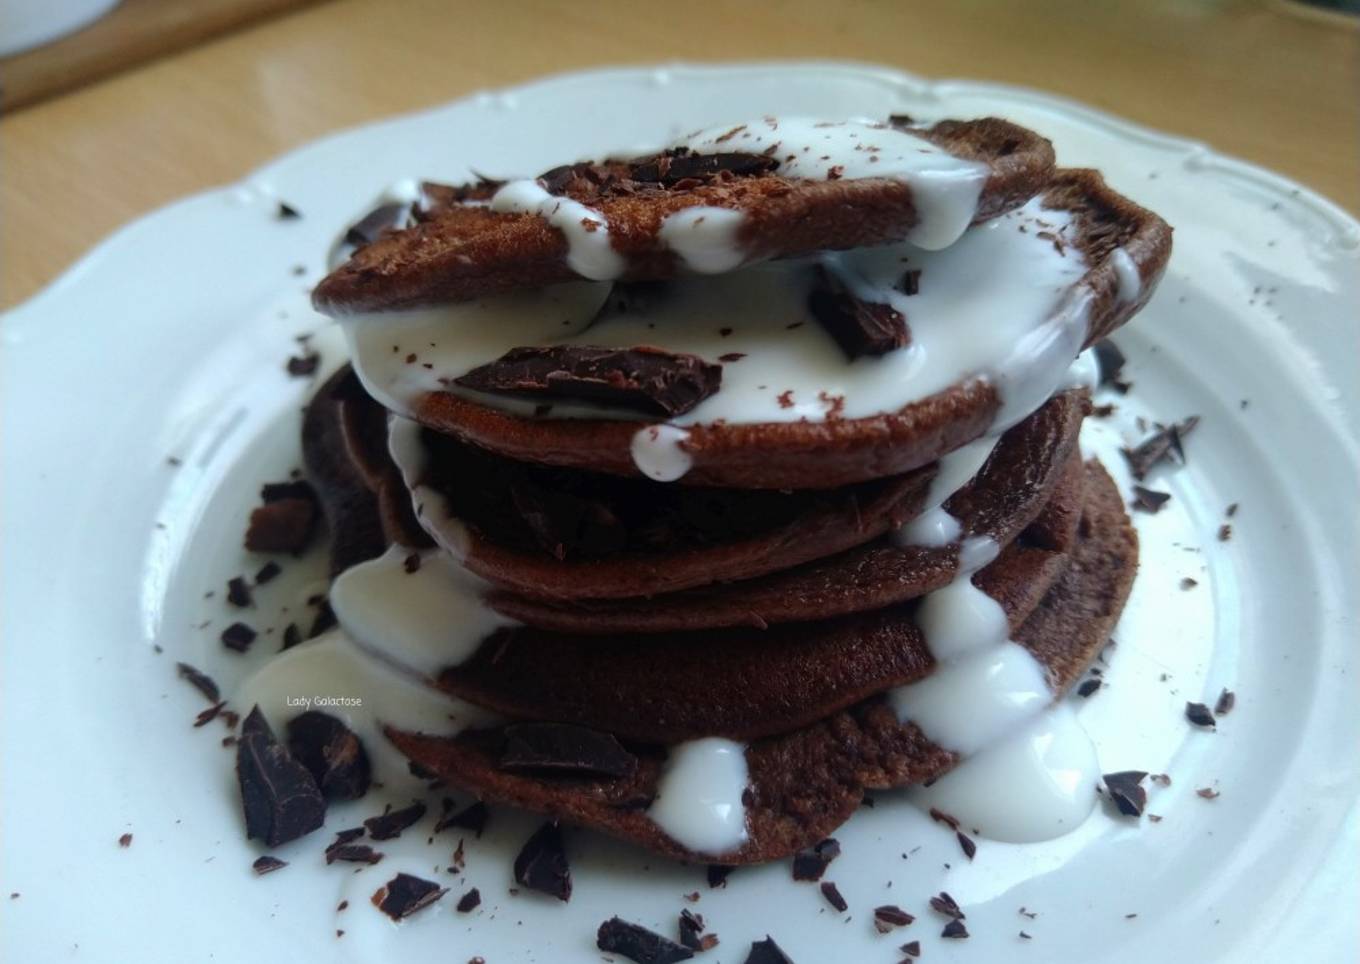 Keto chocolate pancakes with mascarpone (no flour, no sugar)